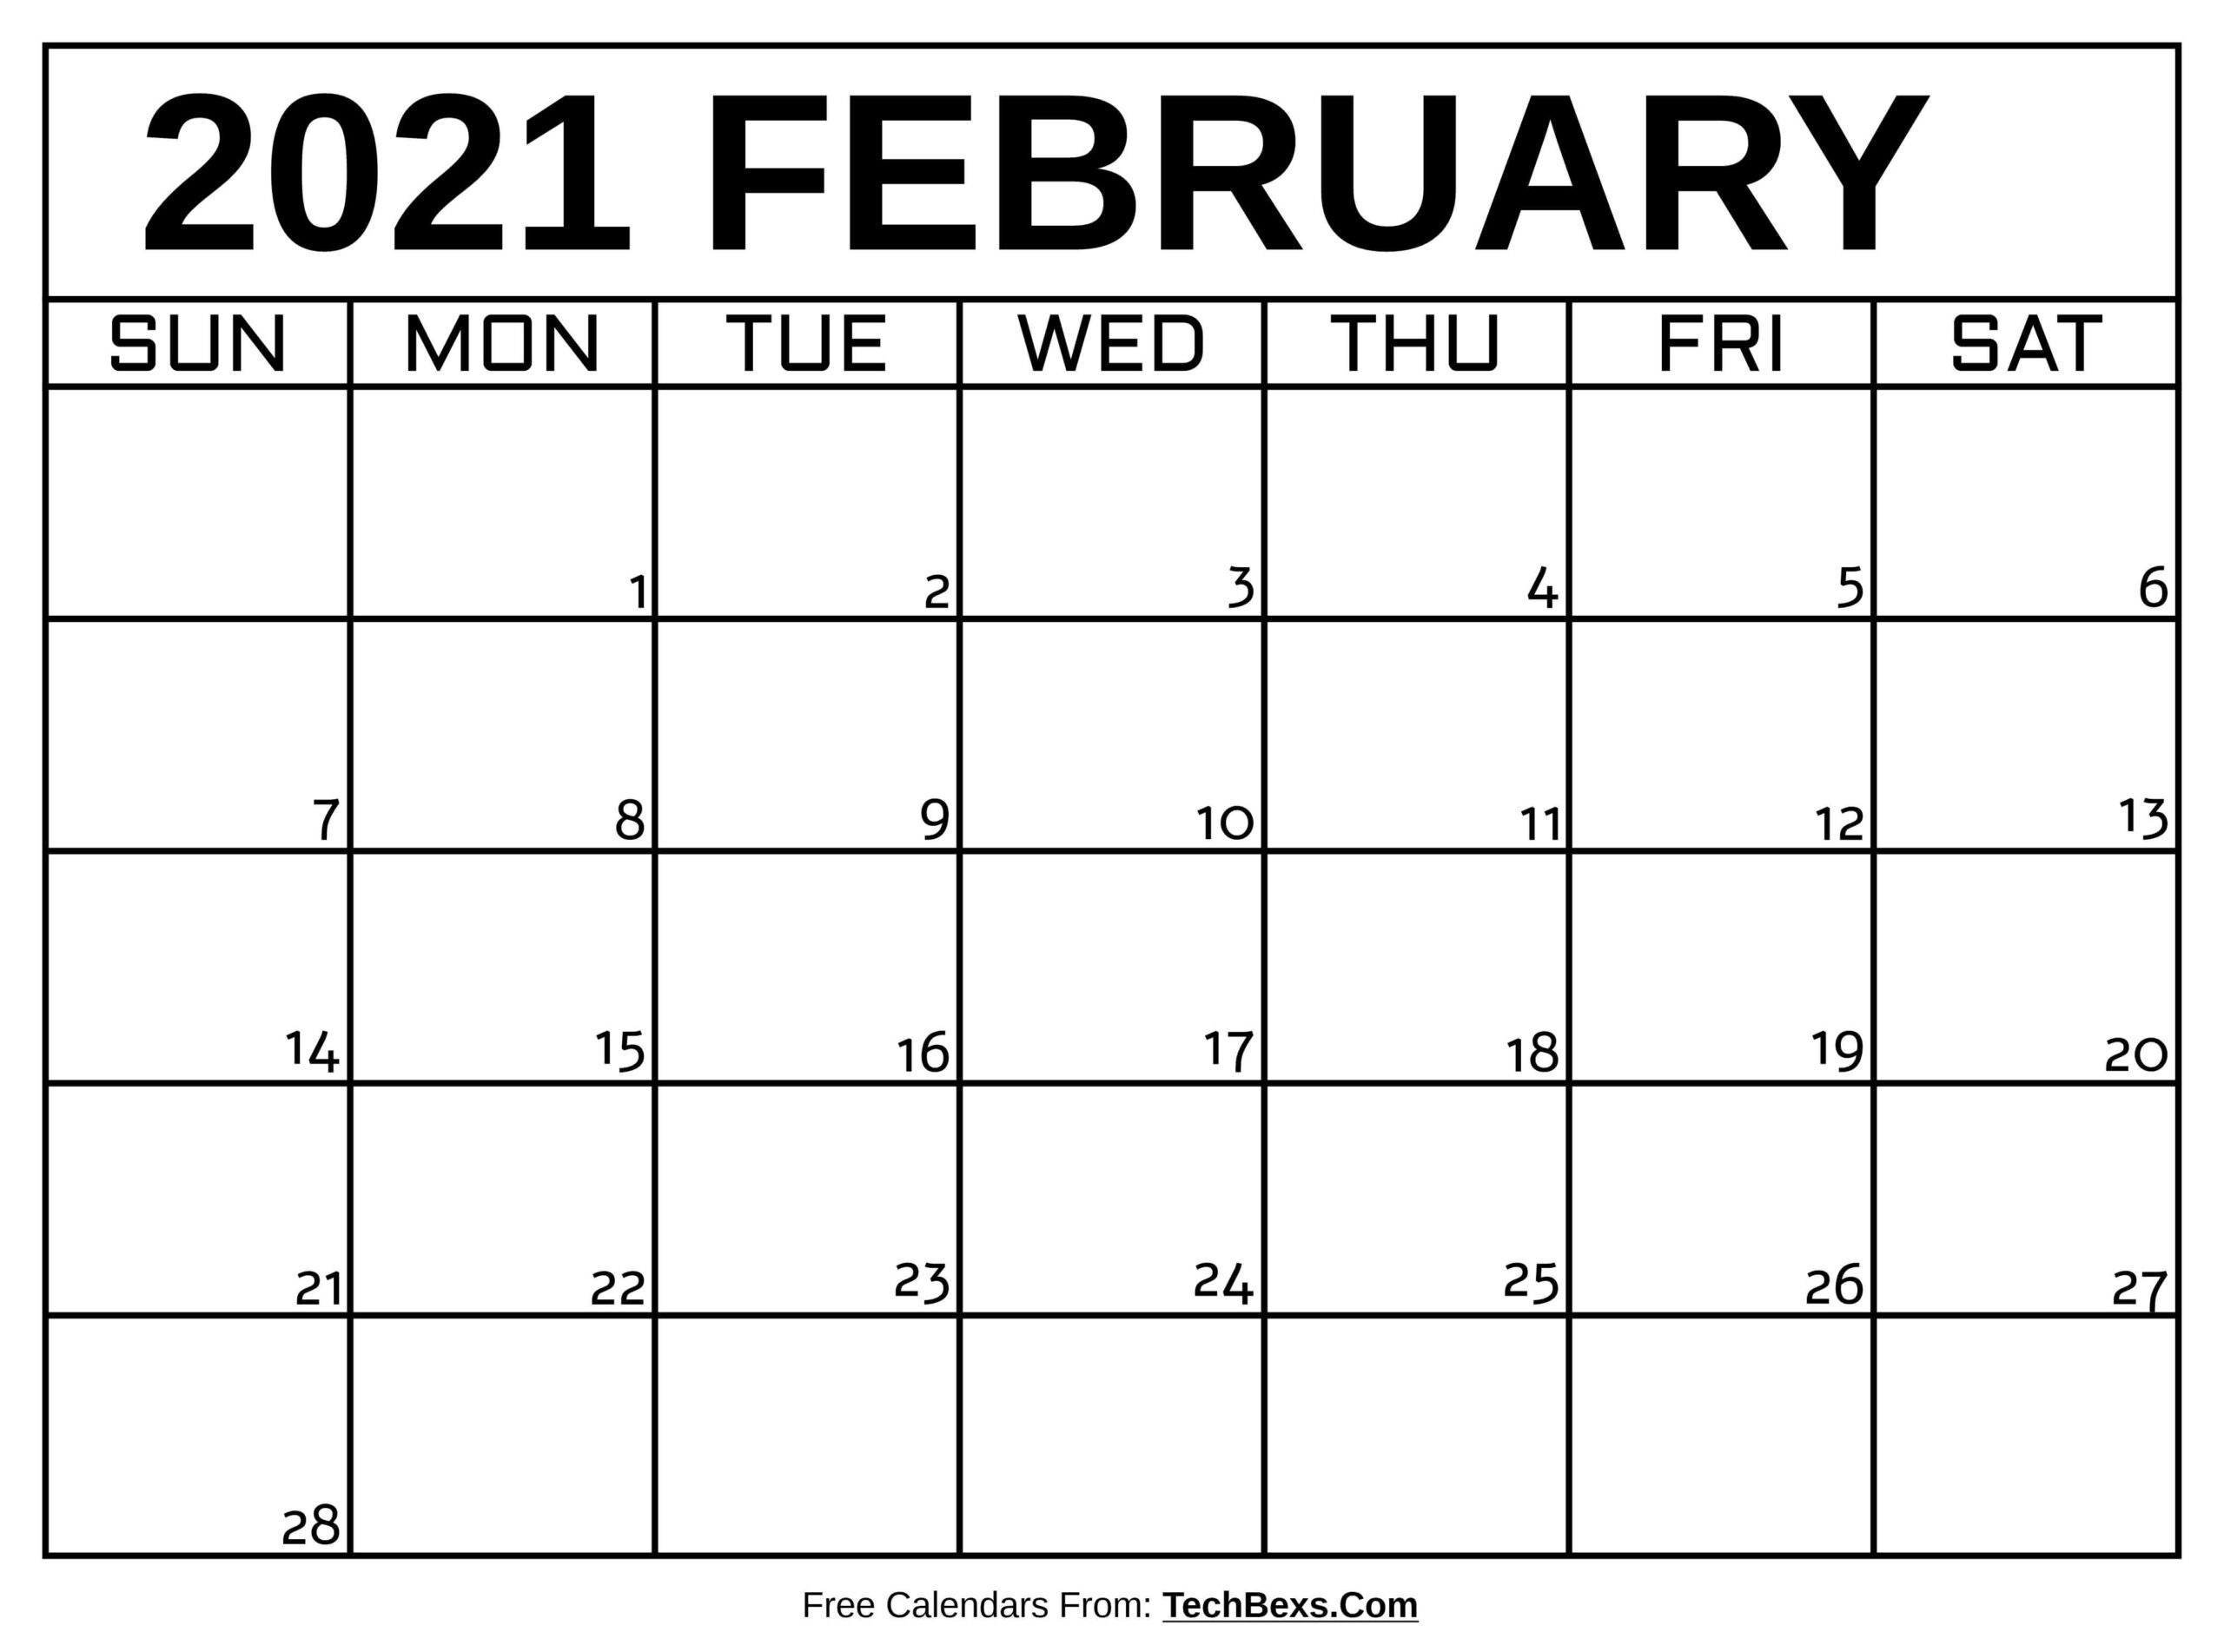 Monthly February 2021 Calendar Template-Calendar Templates 2021 February